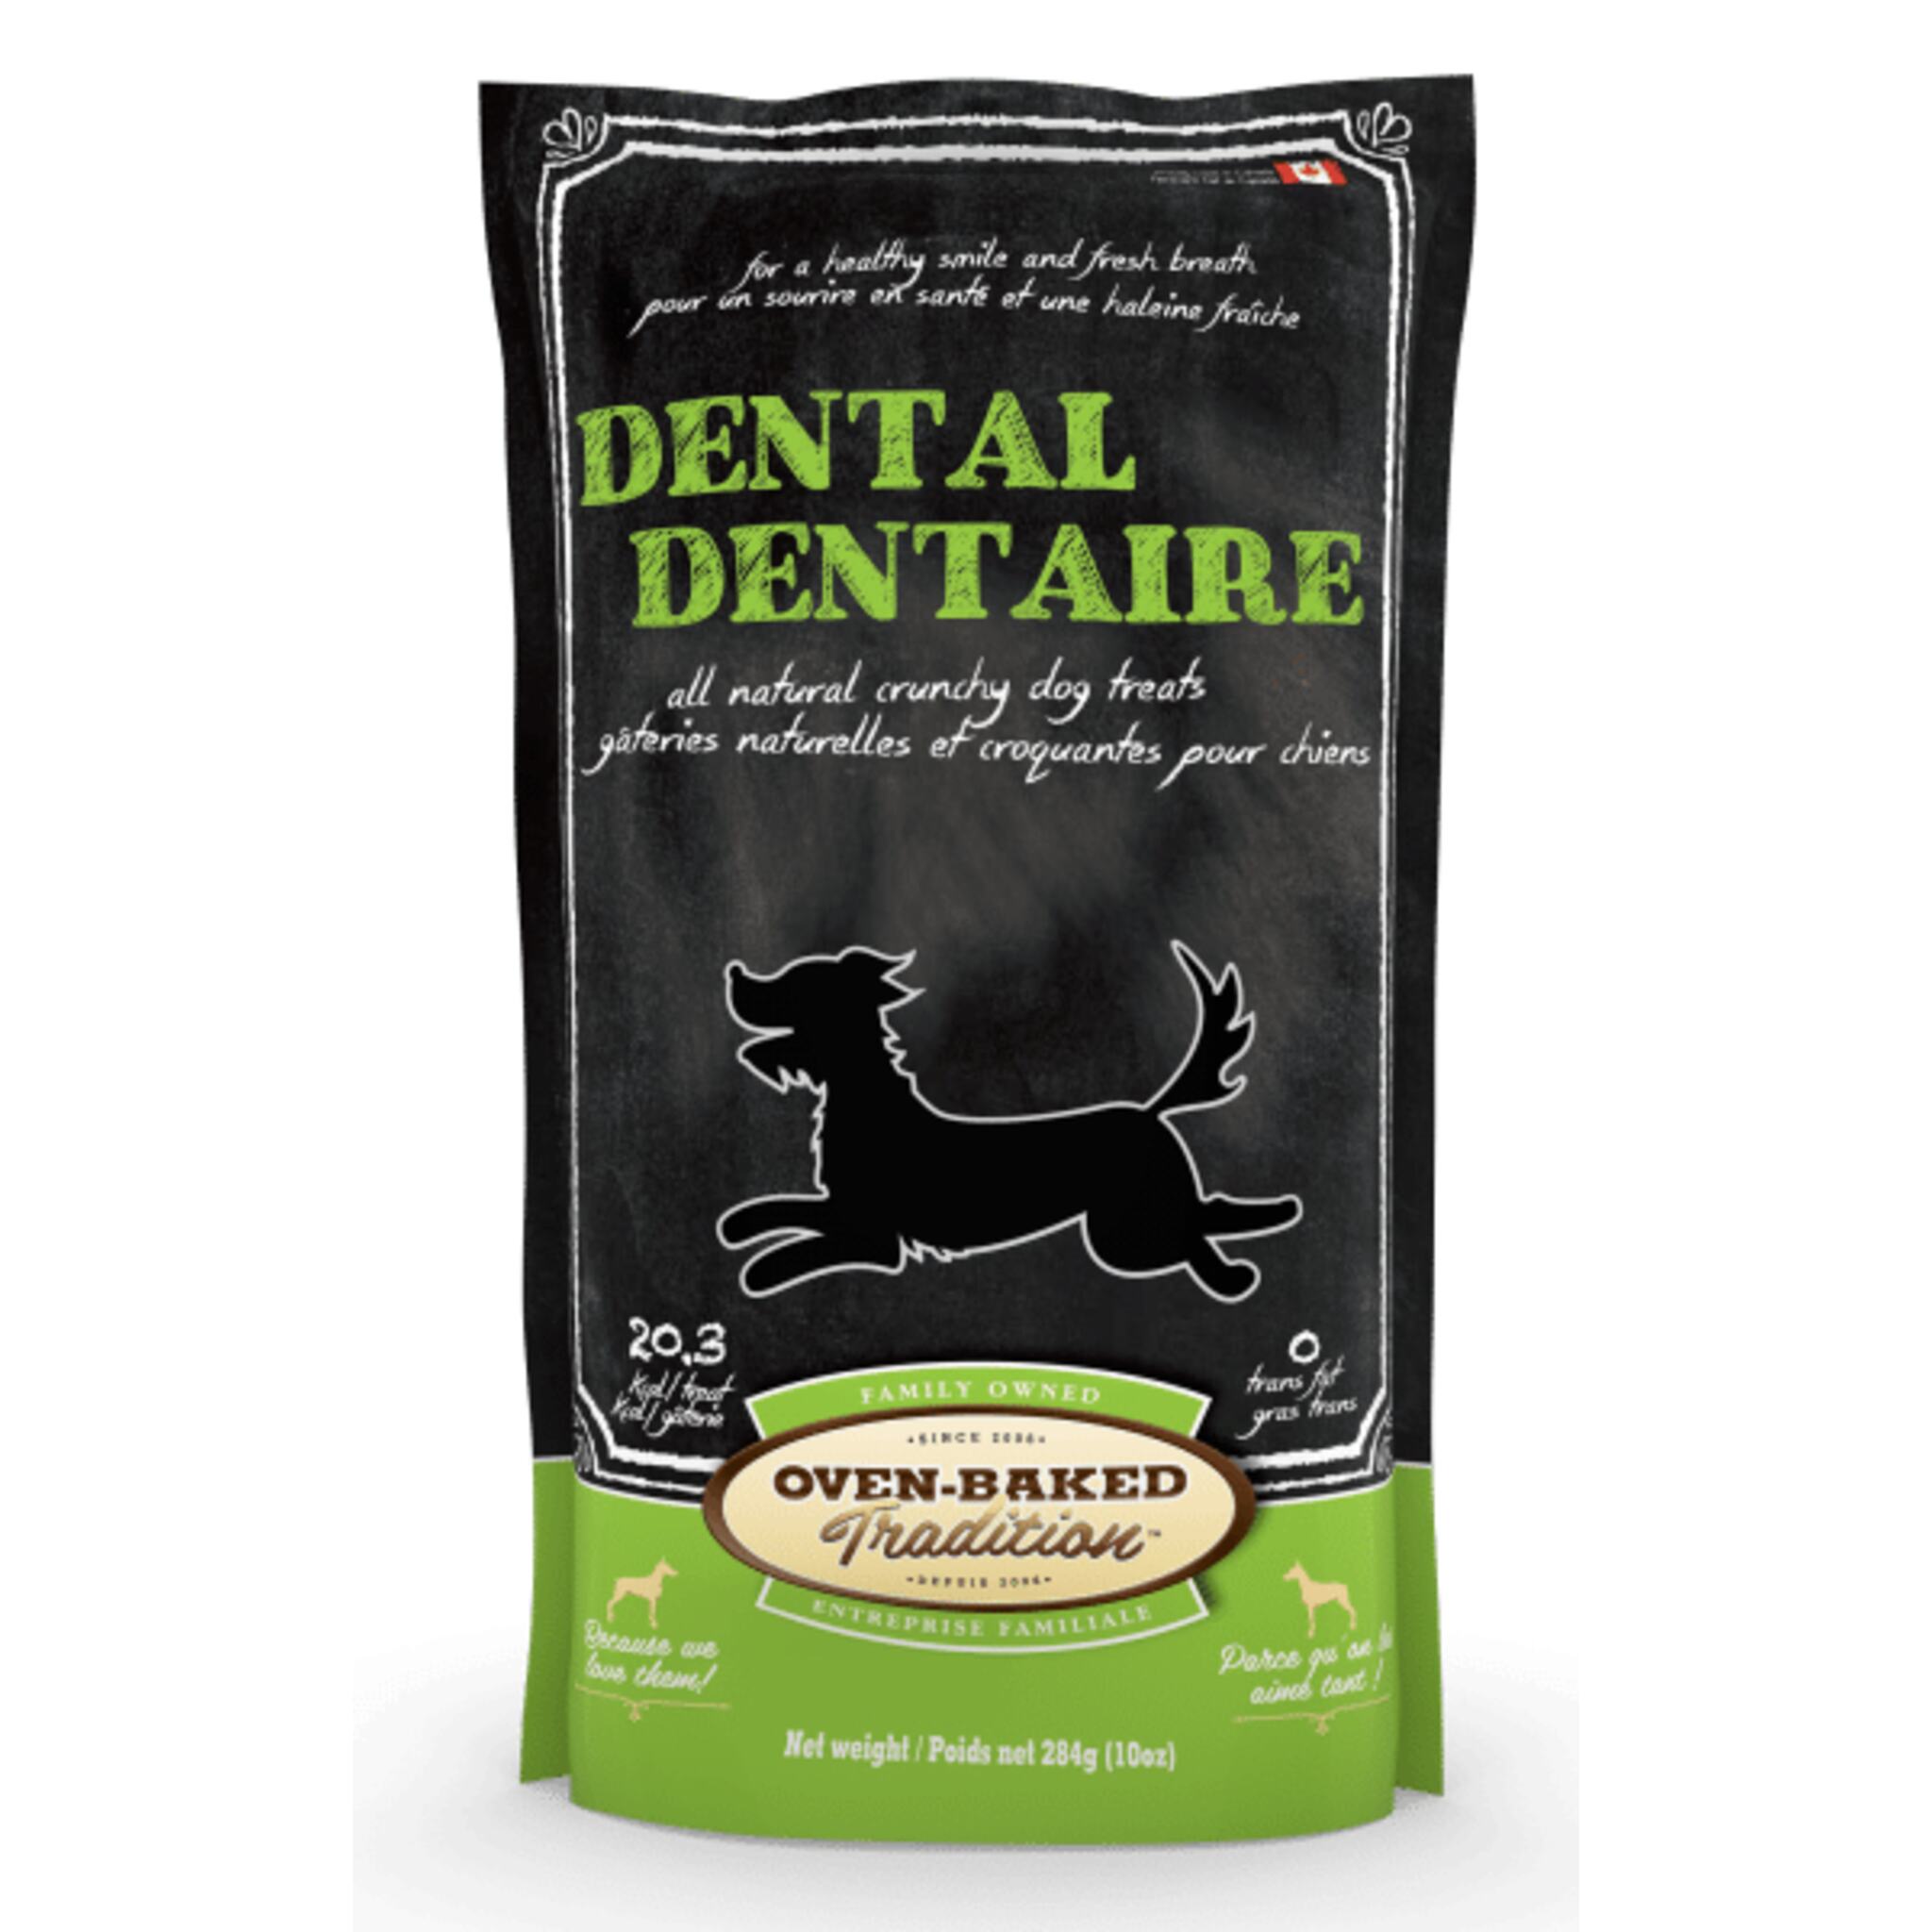 A bag of Oven-Baked Tradition all natural crunchy dental dog treats, 10 oz.